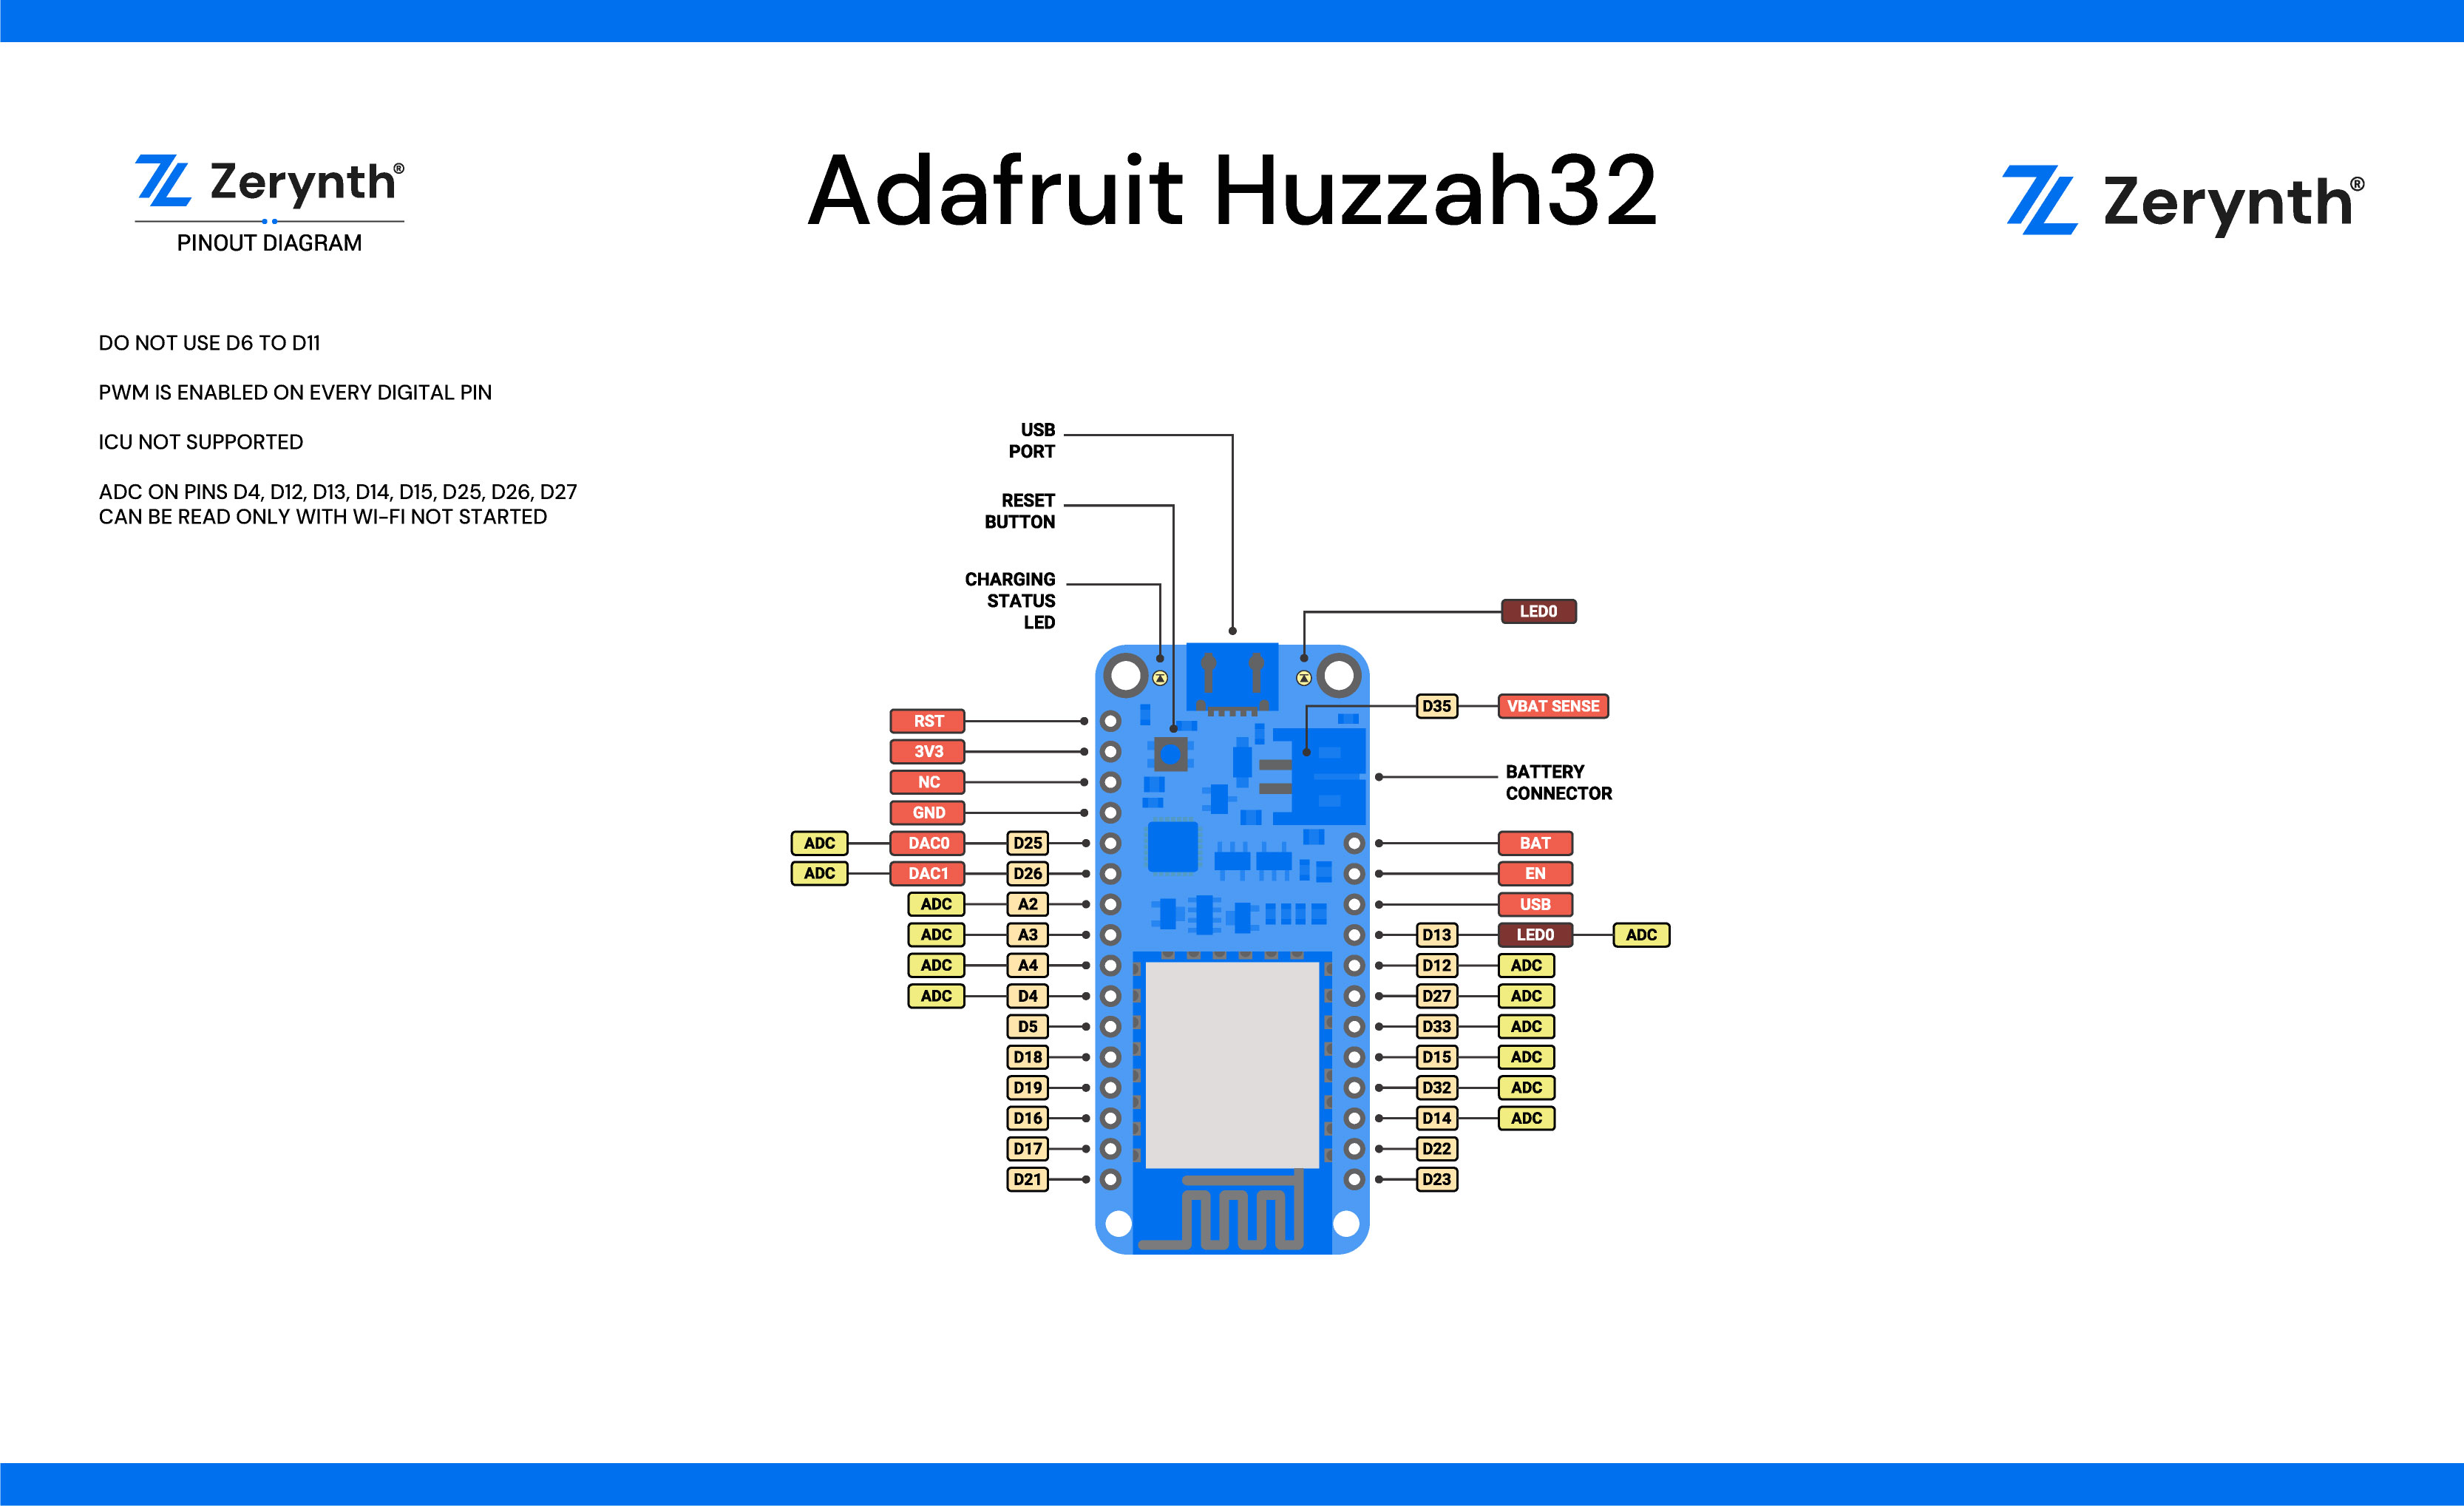 Adafruit Huzzah32